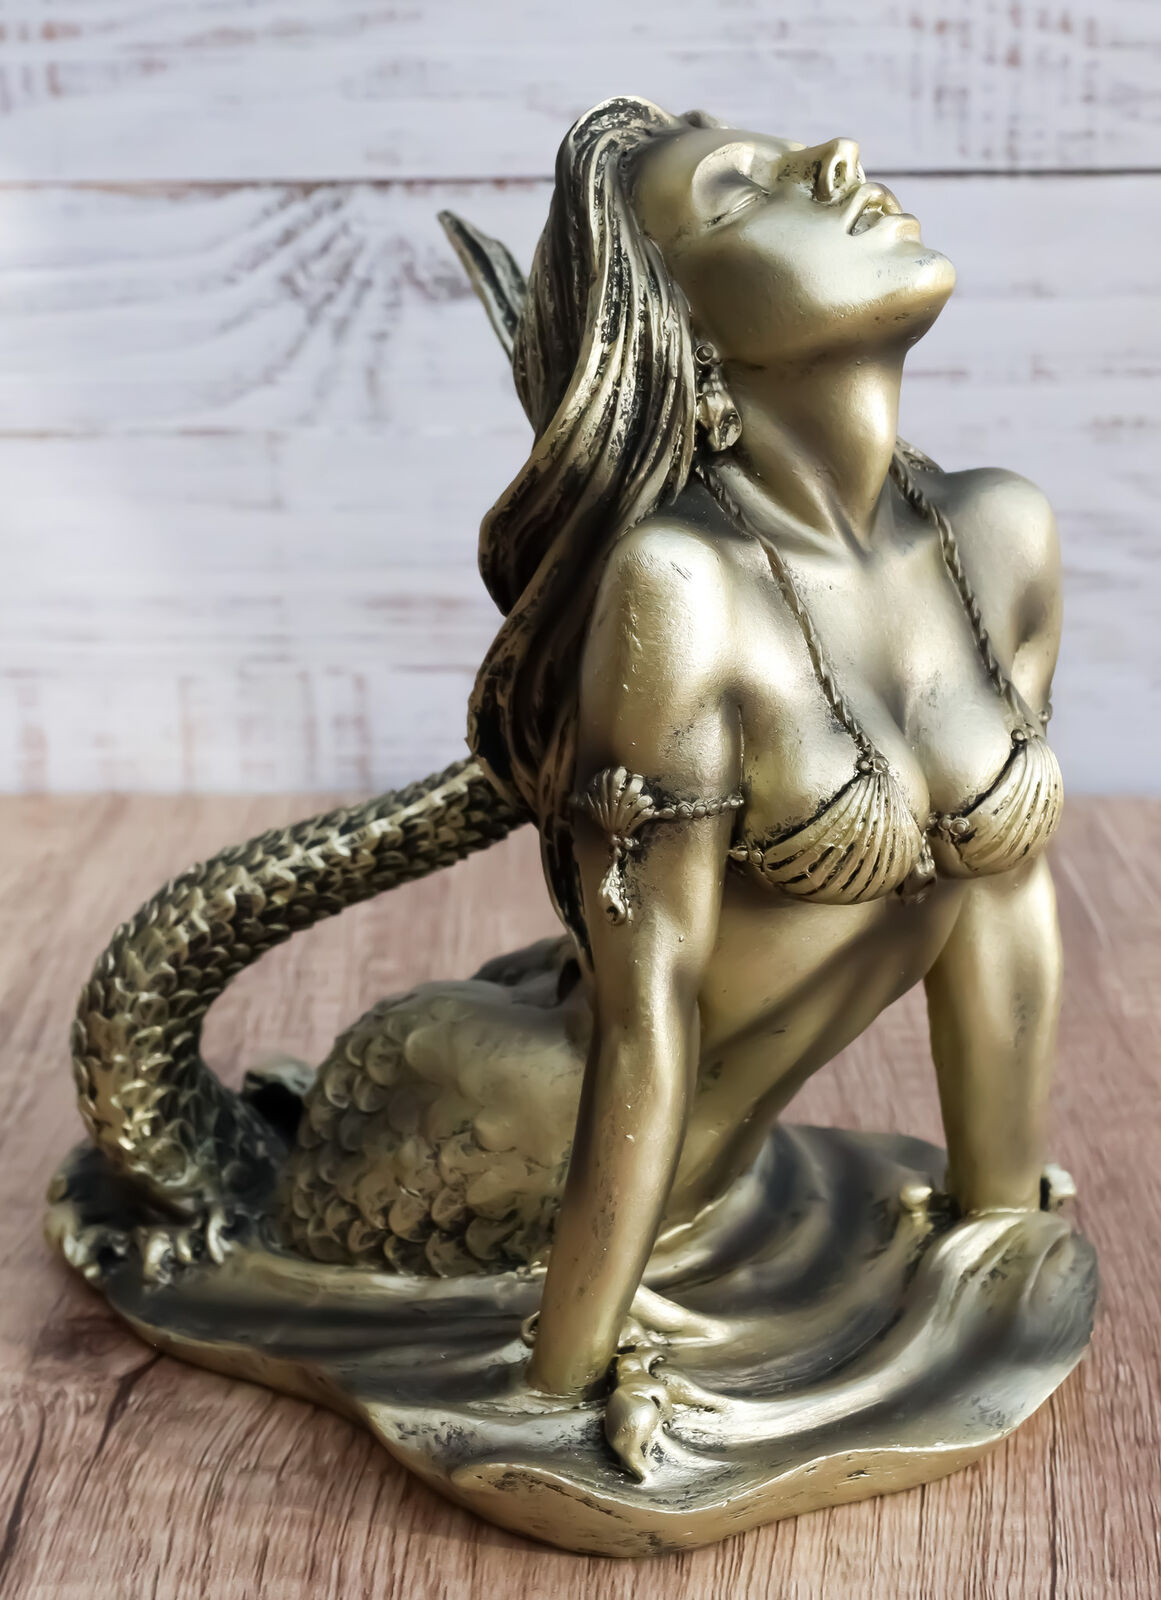 Ebros Aged Bronze Resin Seductive Siren of The Seas Mermaid Statue 7